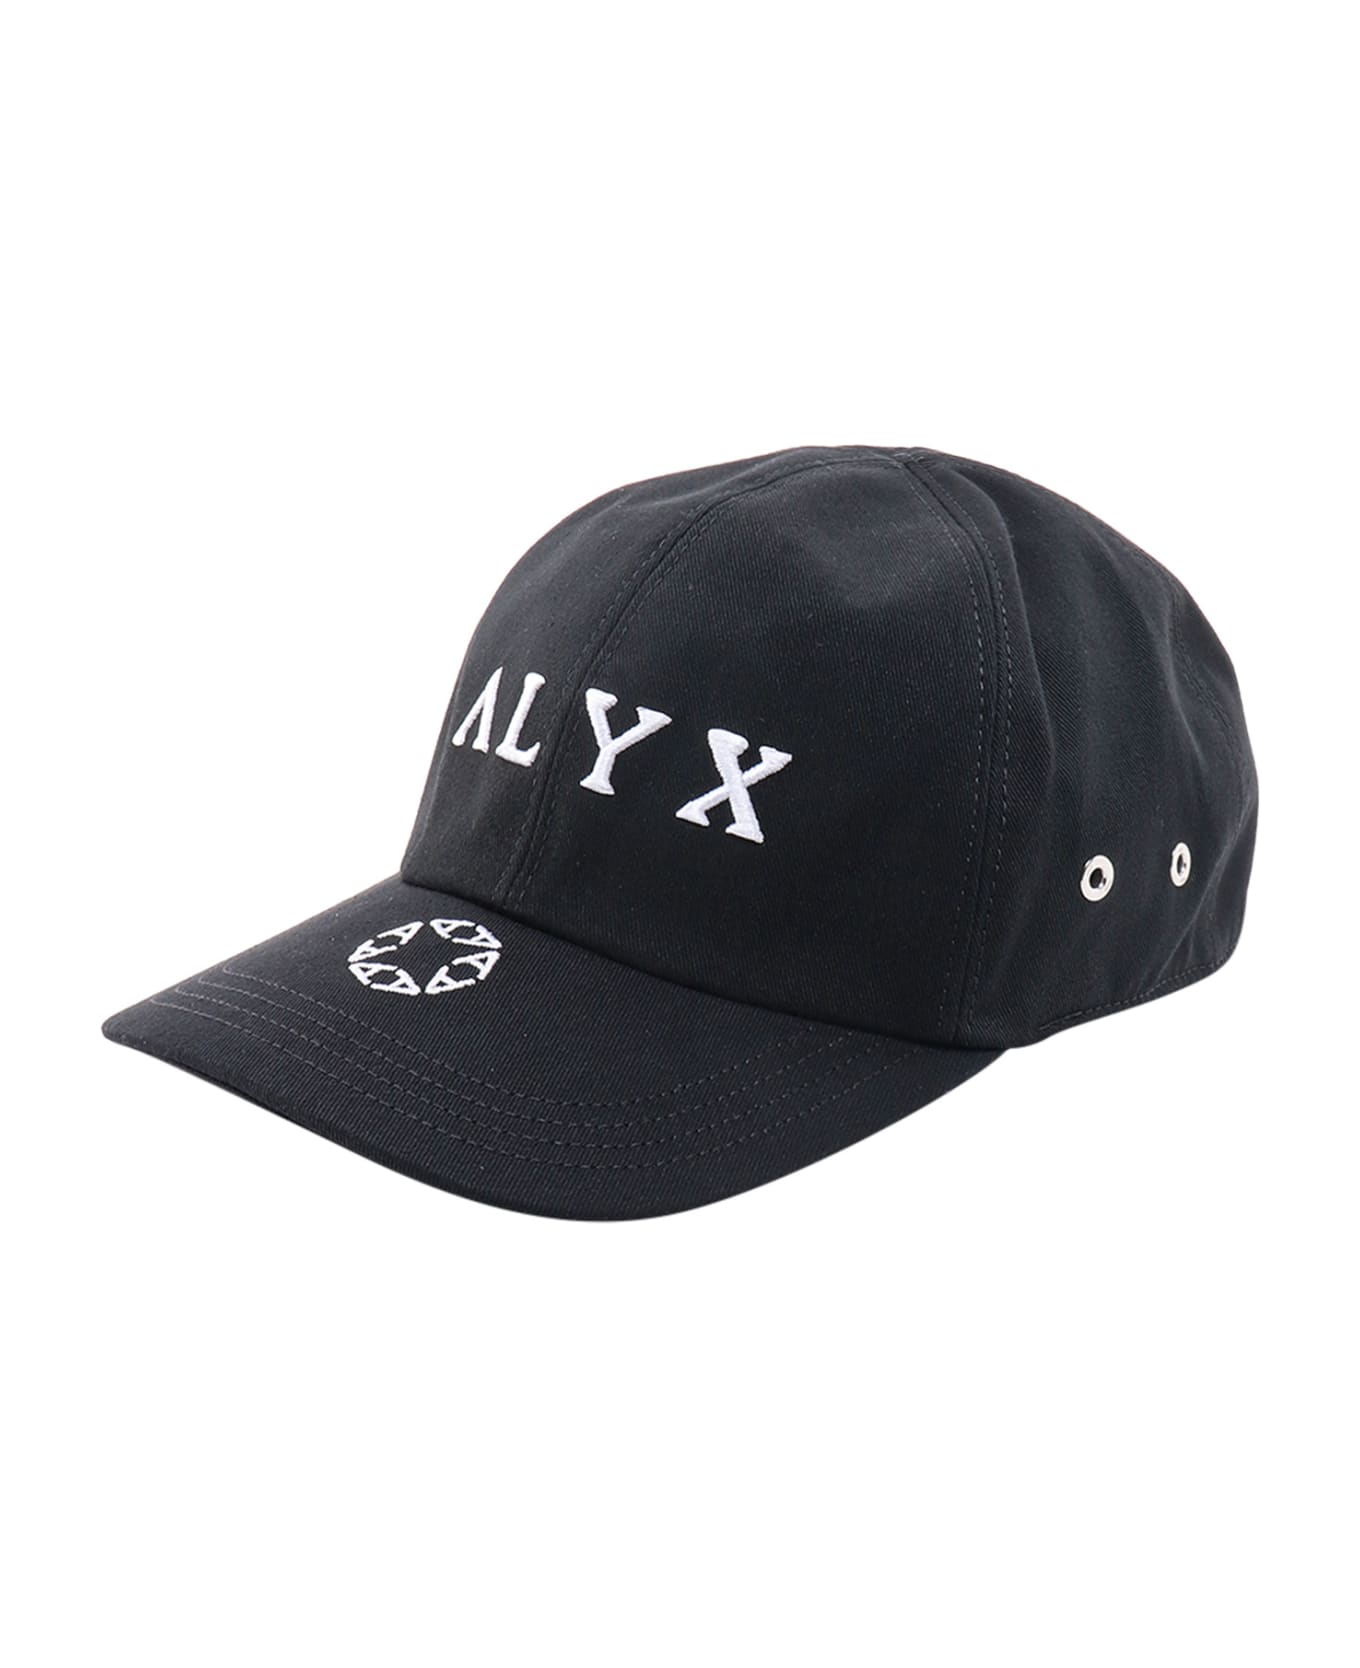 1017 ALYX 9SM Logo Cap - Black